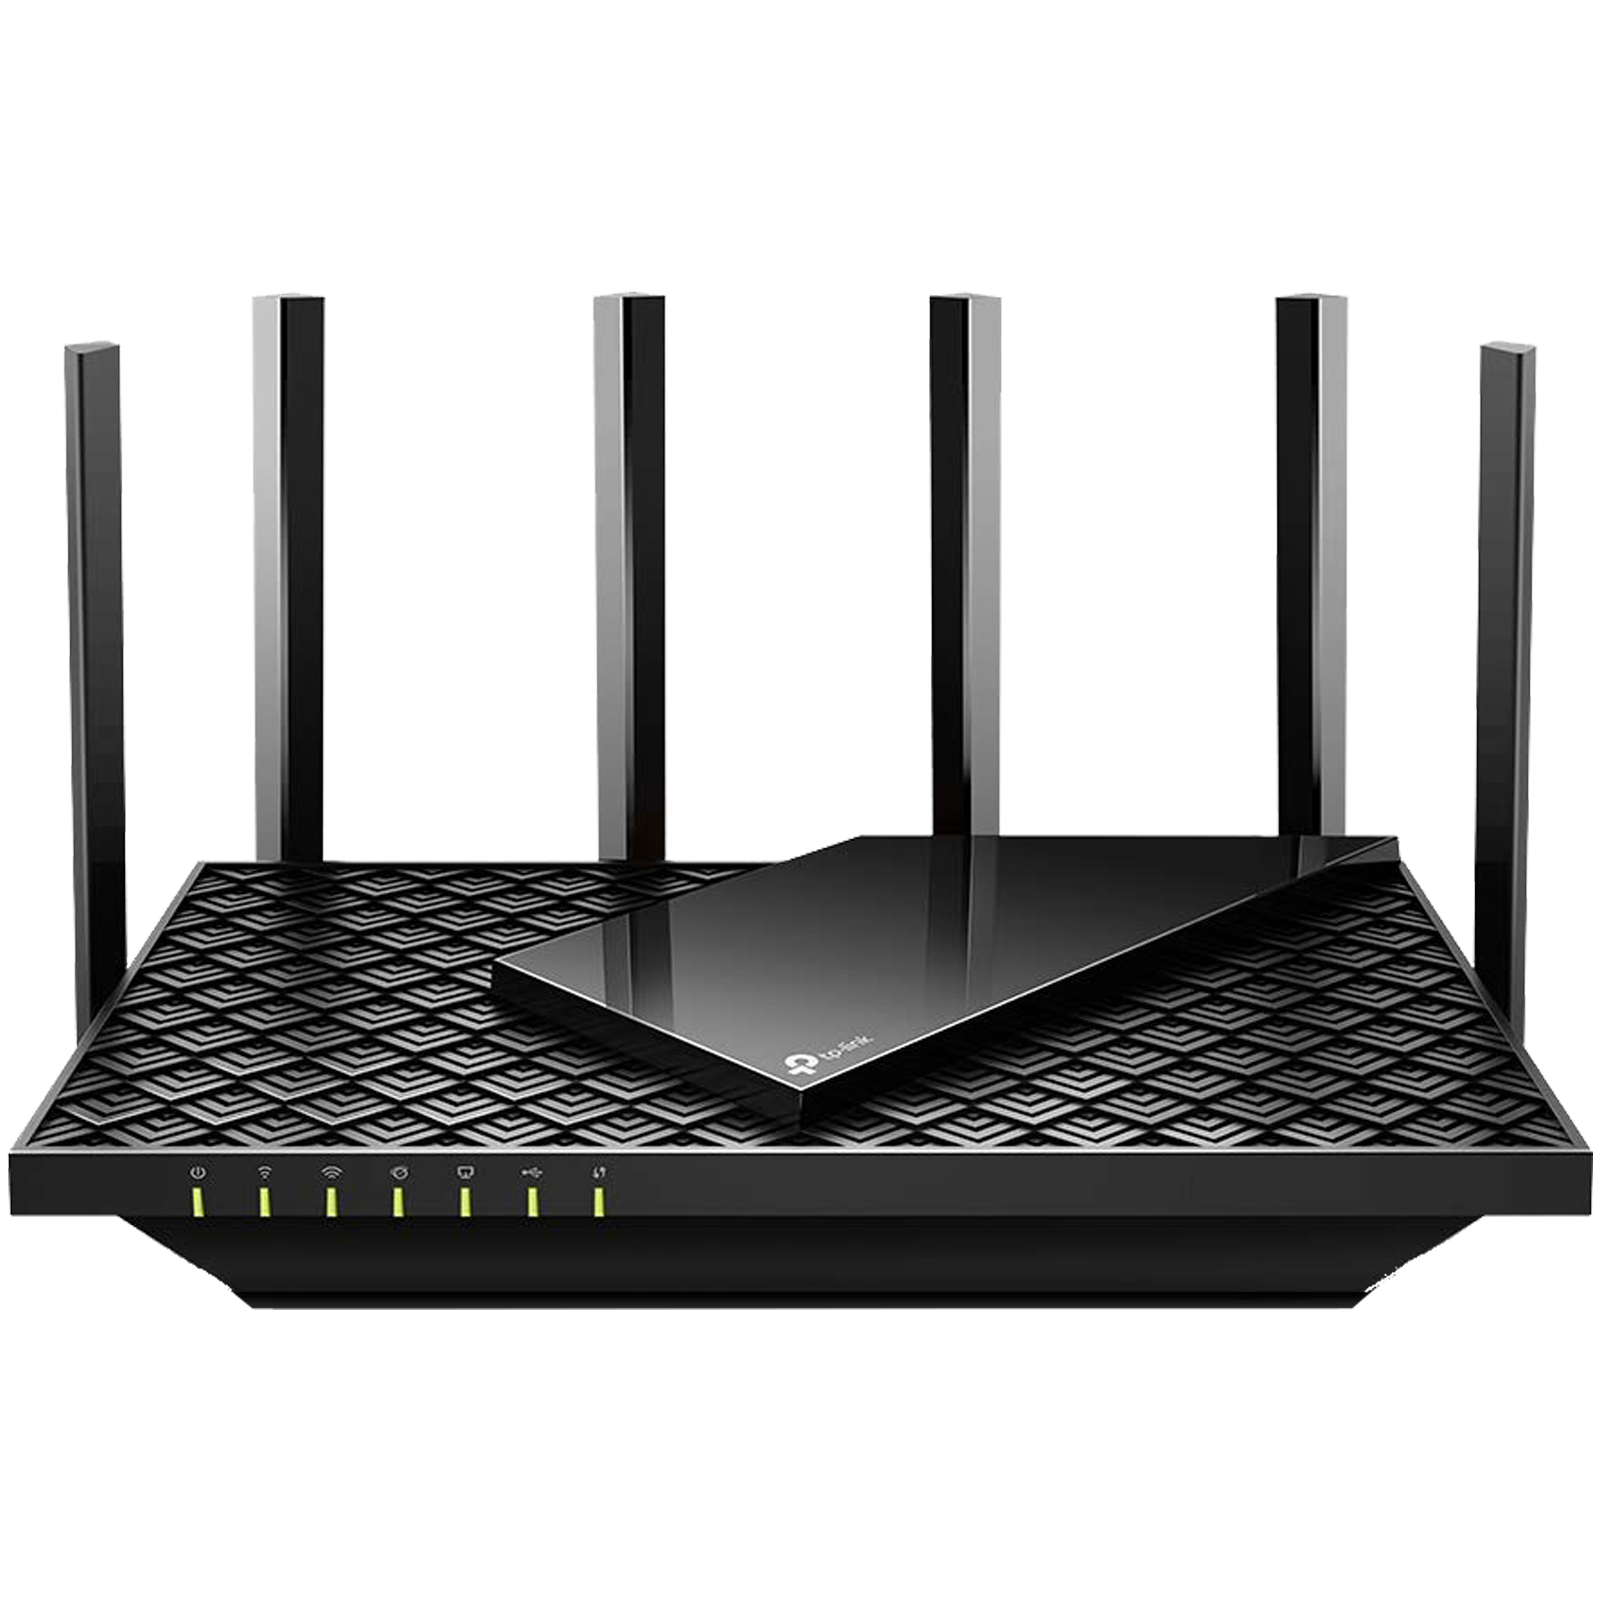 TP-Link Archer AX73 Dual Band 5400 Mbps WiFi Router (6 Antennas, 4 LAN Ports, Extensive Range, Black)_1